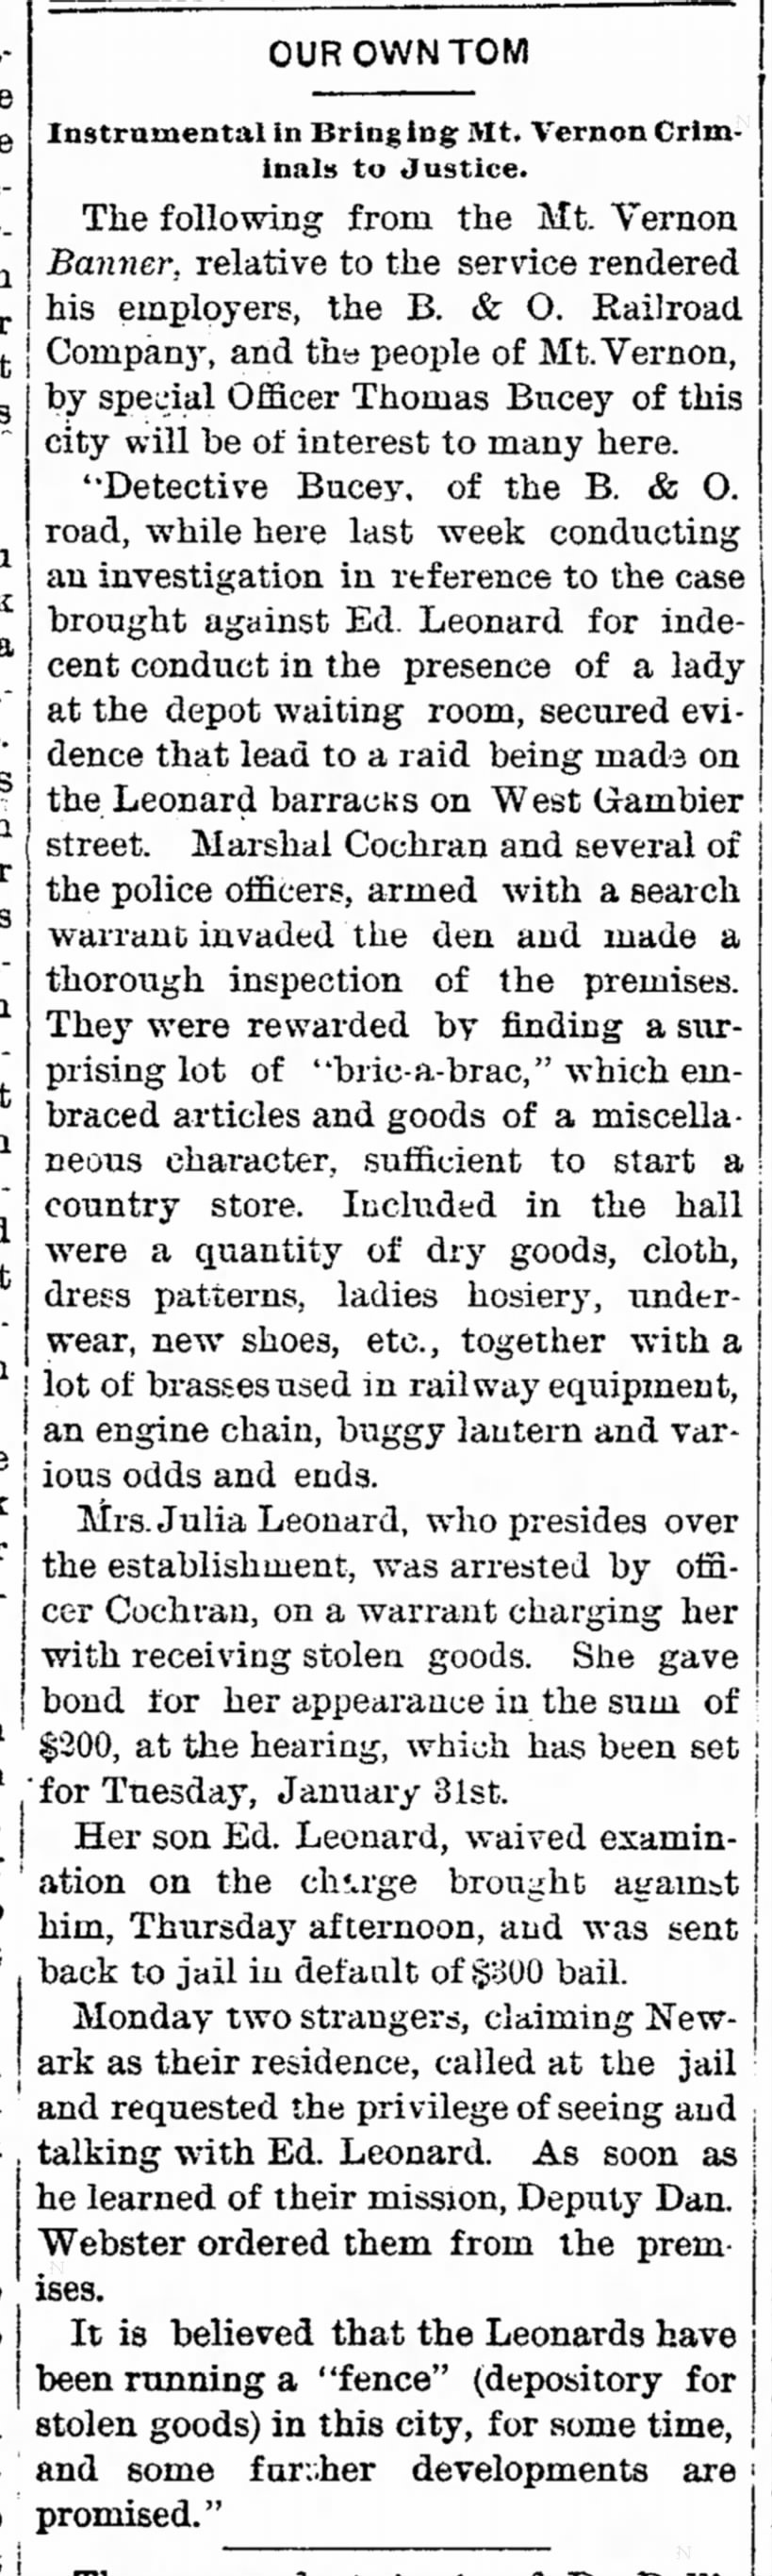 The Newark Advocate (Newark, Ohio) 13 Jan 1893 Friday, pg 8